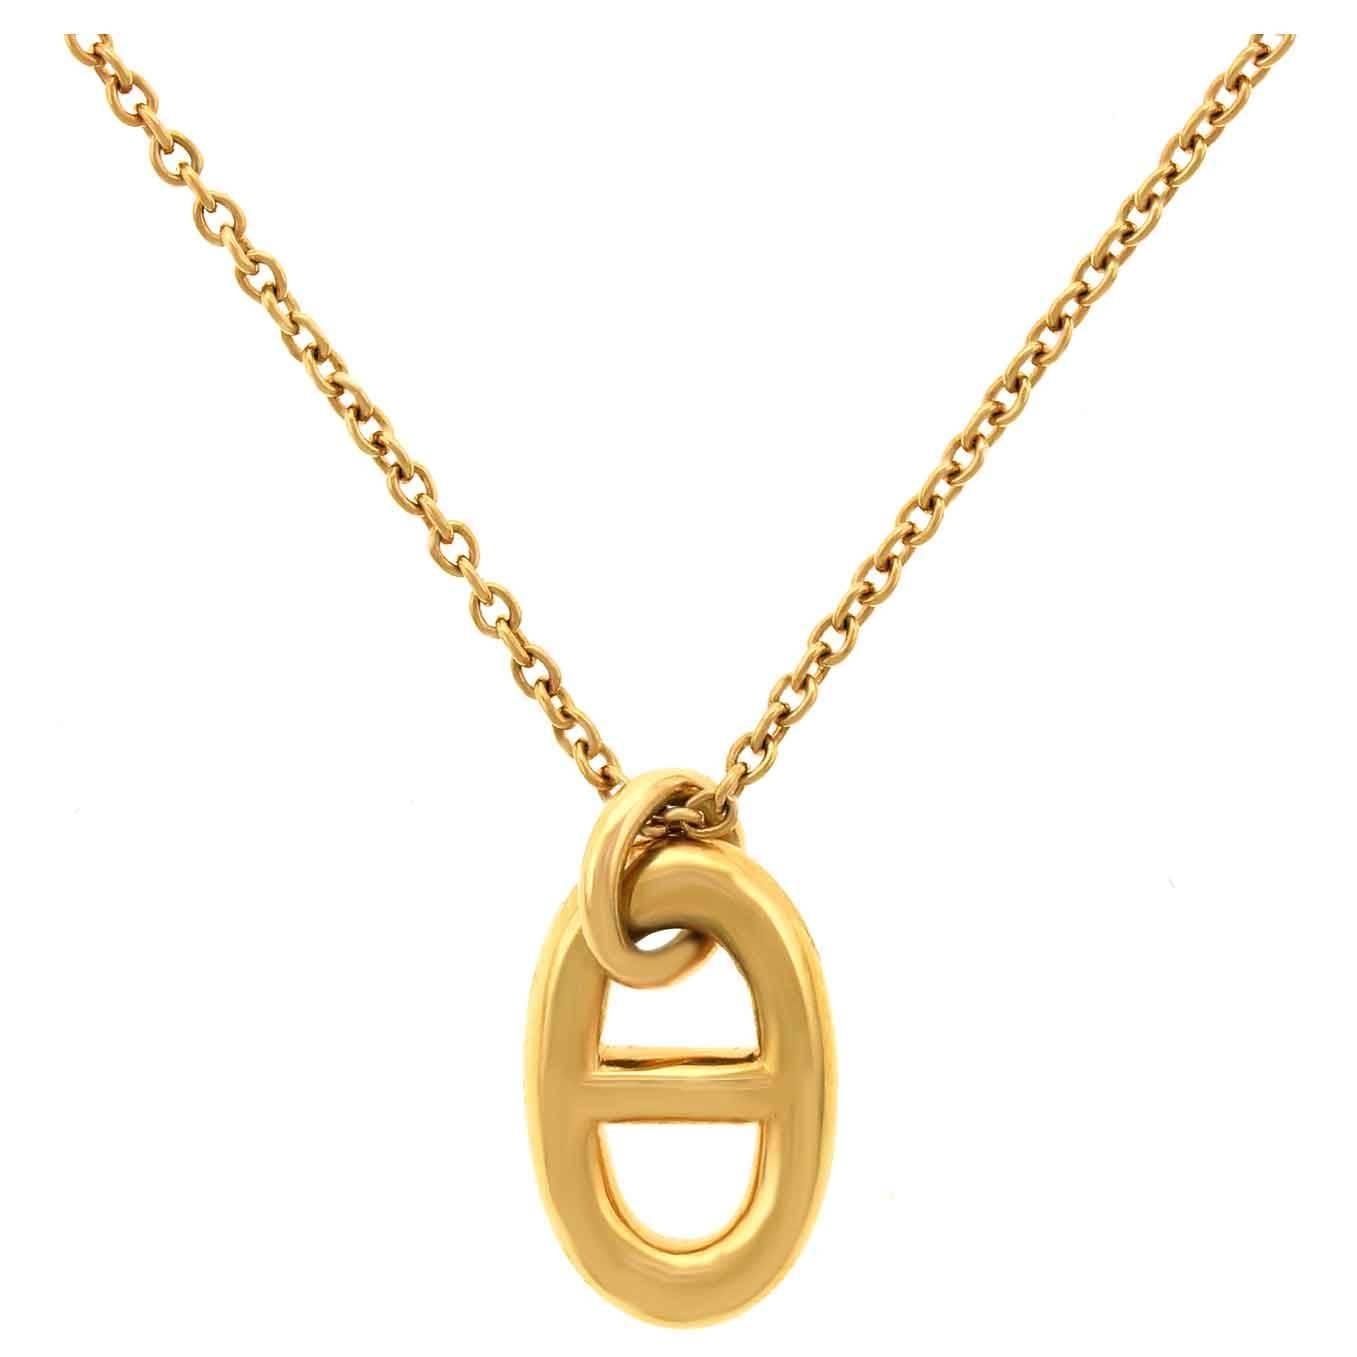 Hermes "Farandole" Gold Pendant For Sale at 1stdibs